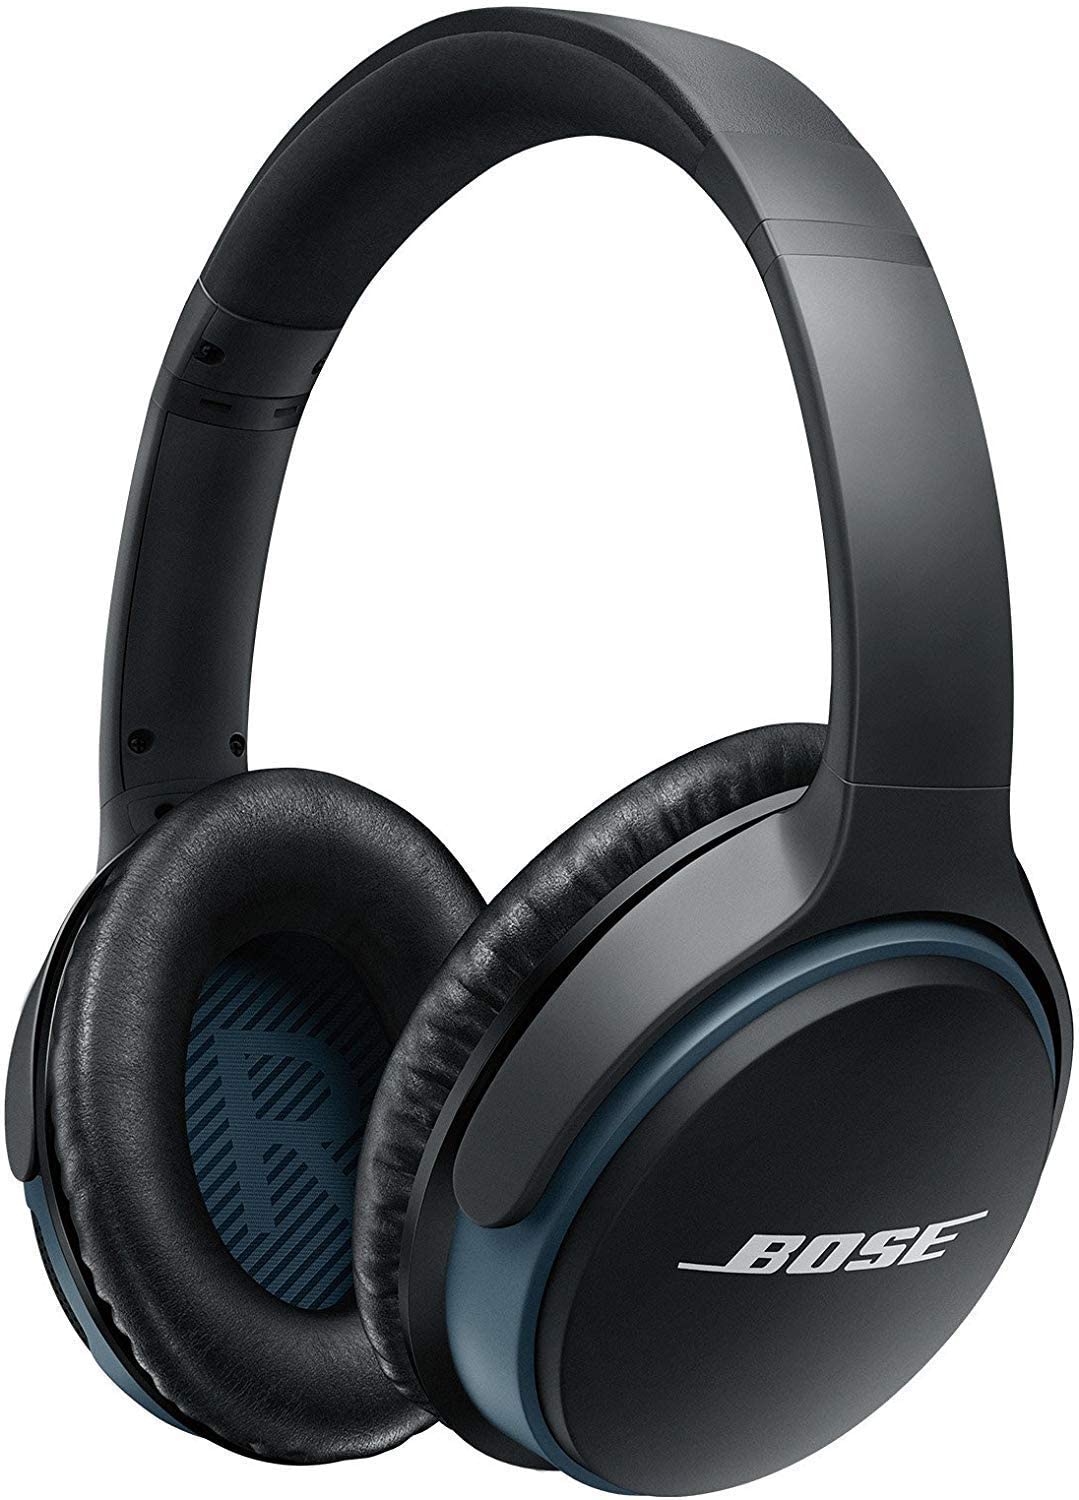 Bose SoundLink Around Ear Wireless Headphones II (Black or White) $129 + Free Shipping via Amazon/Best Buy